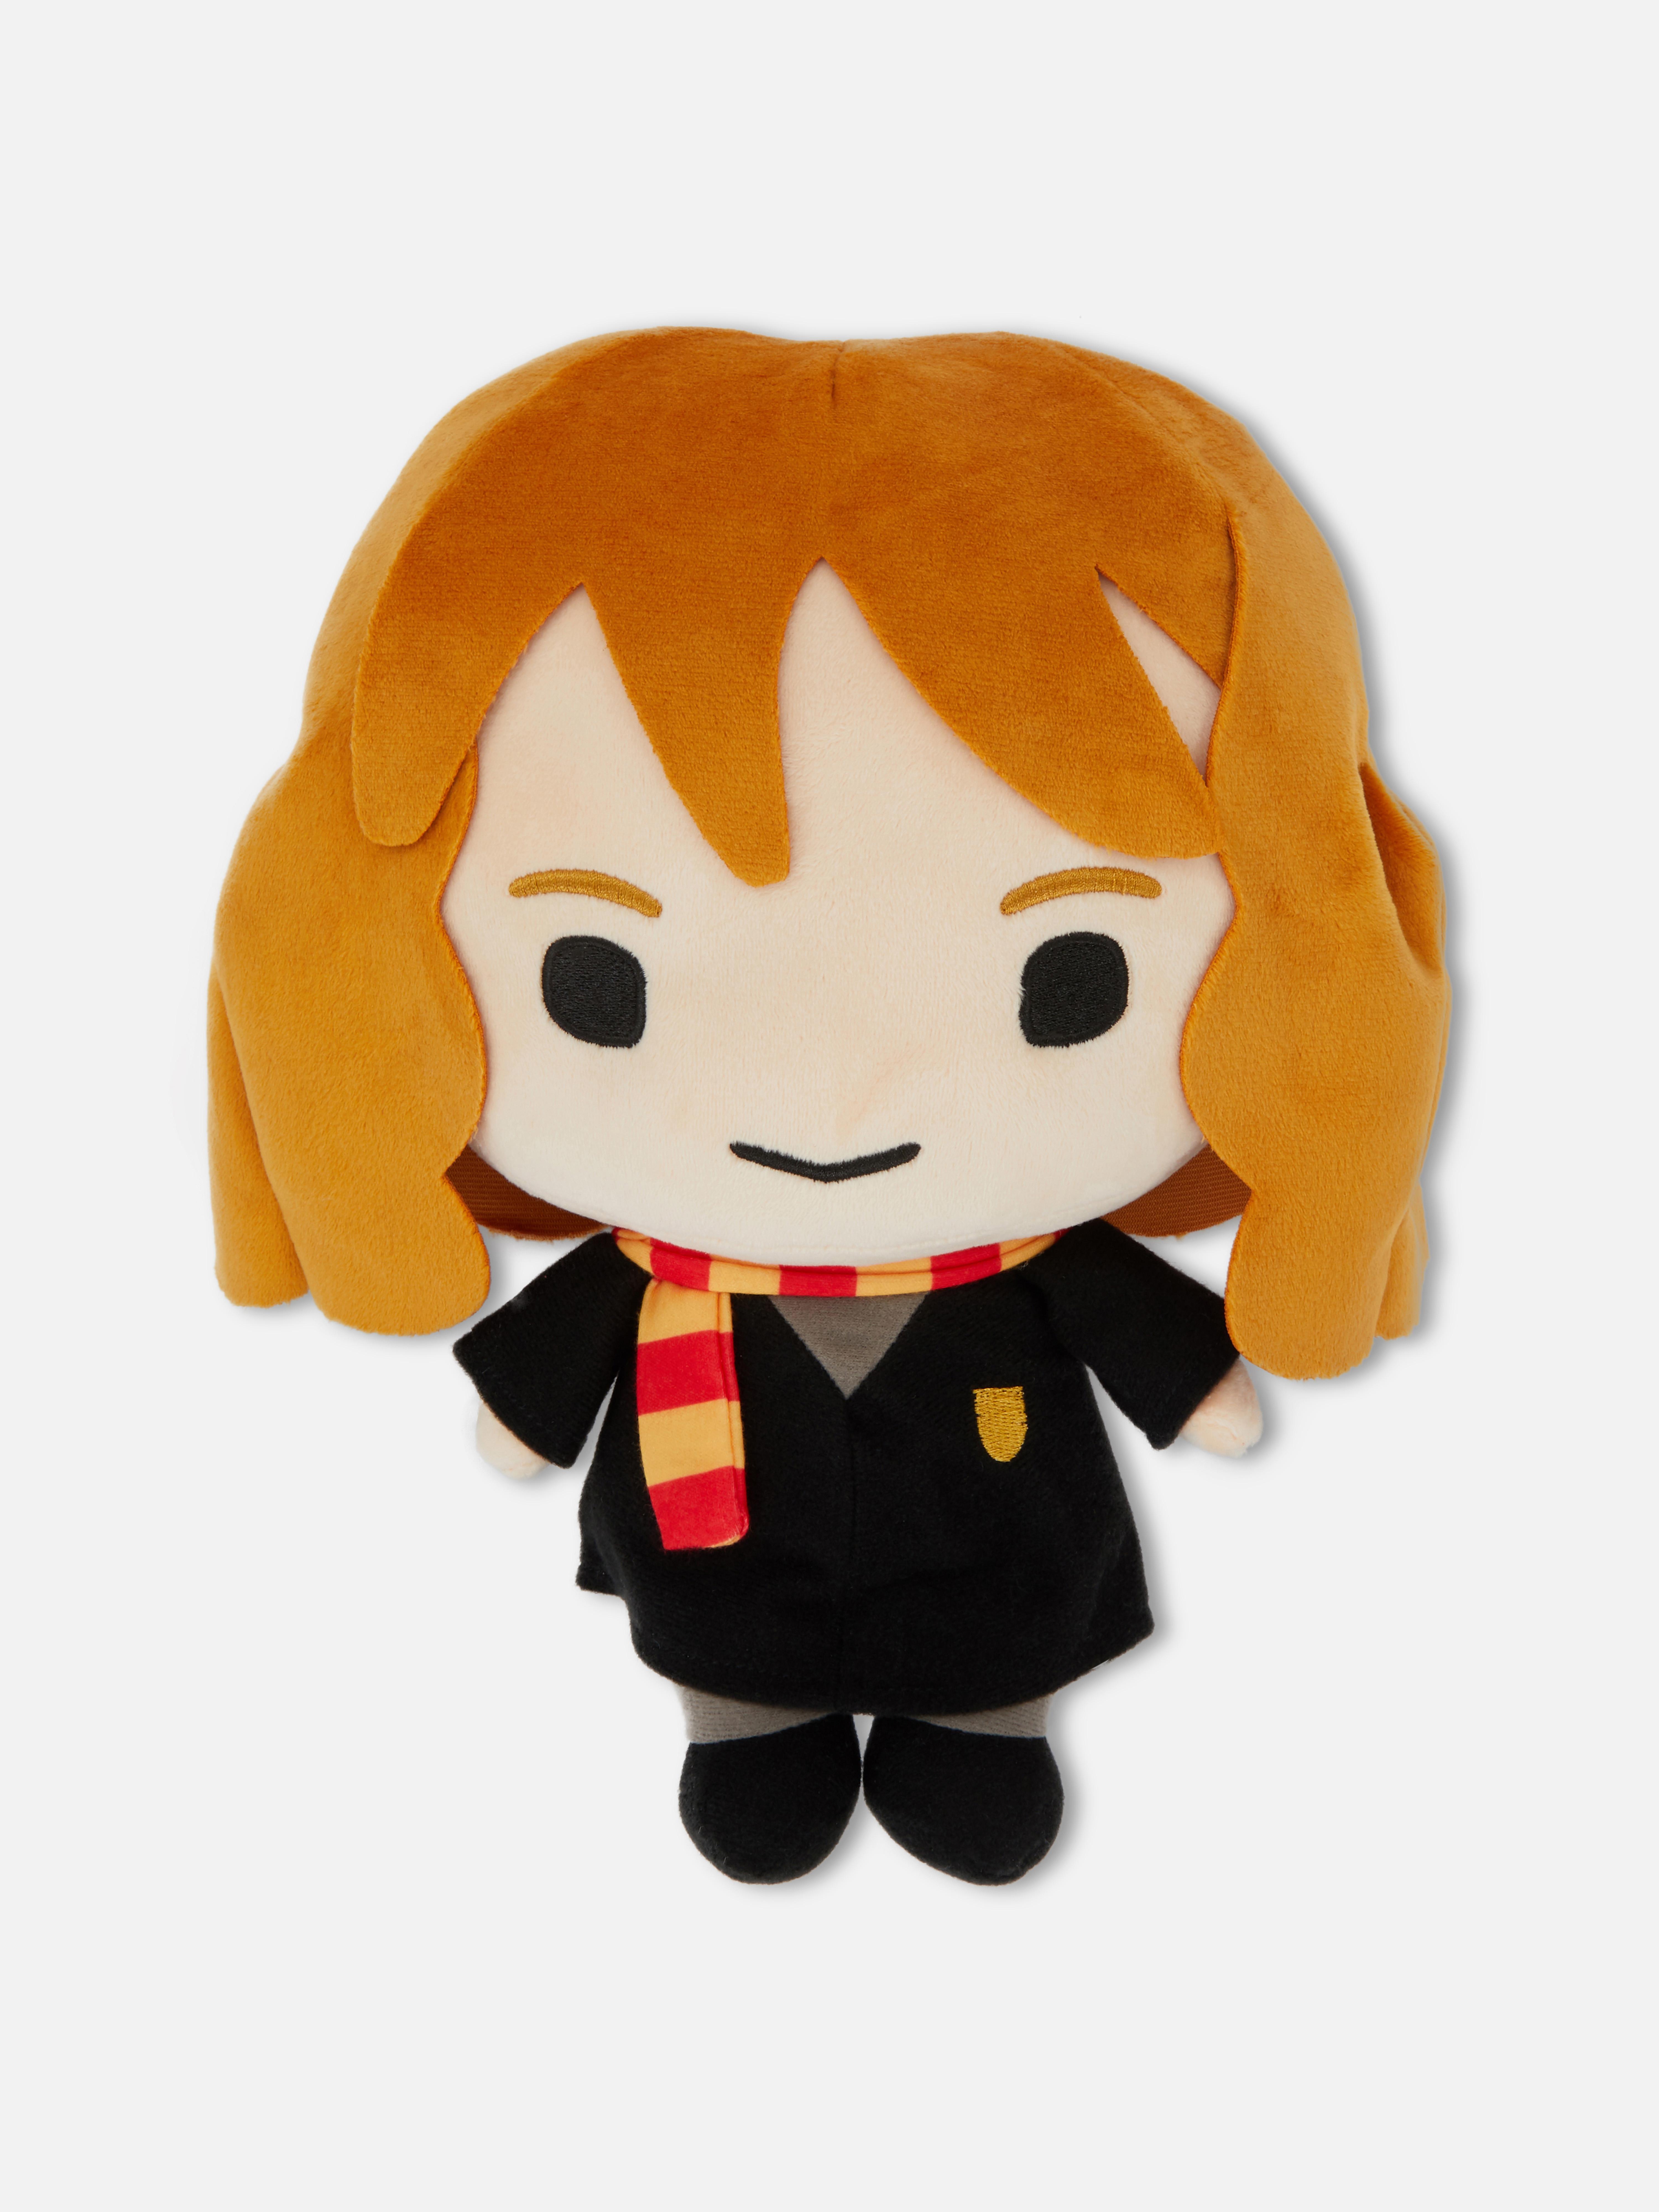 Harry Potter™ Hermione Granger Plush Toy Multi